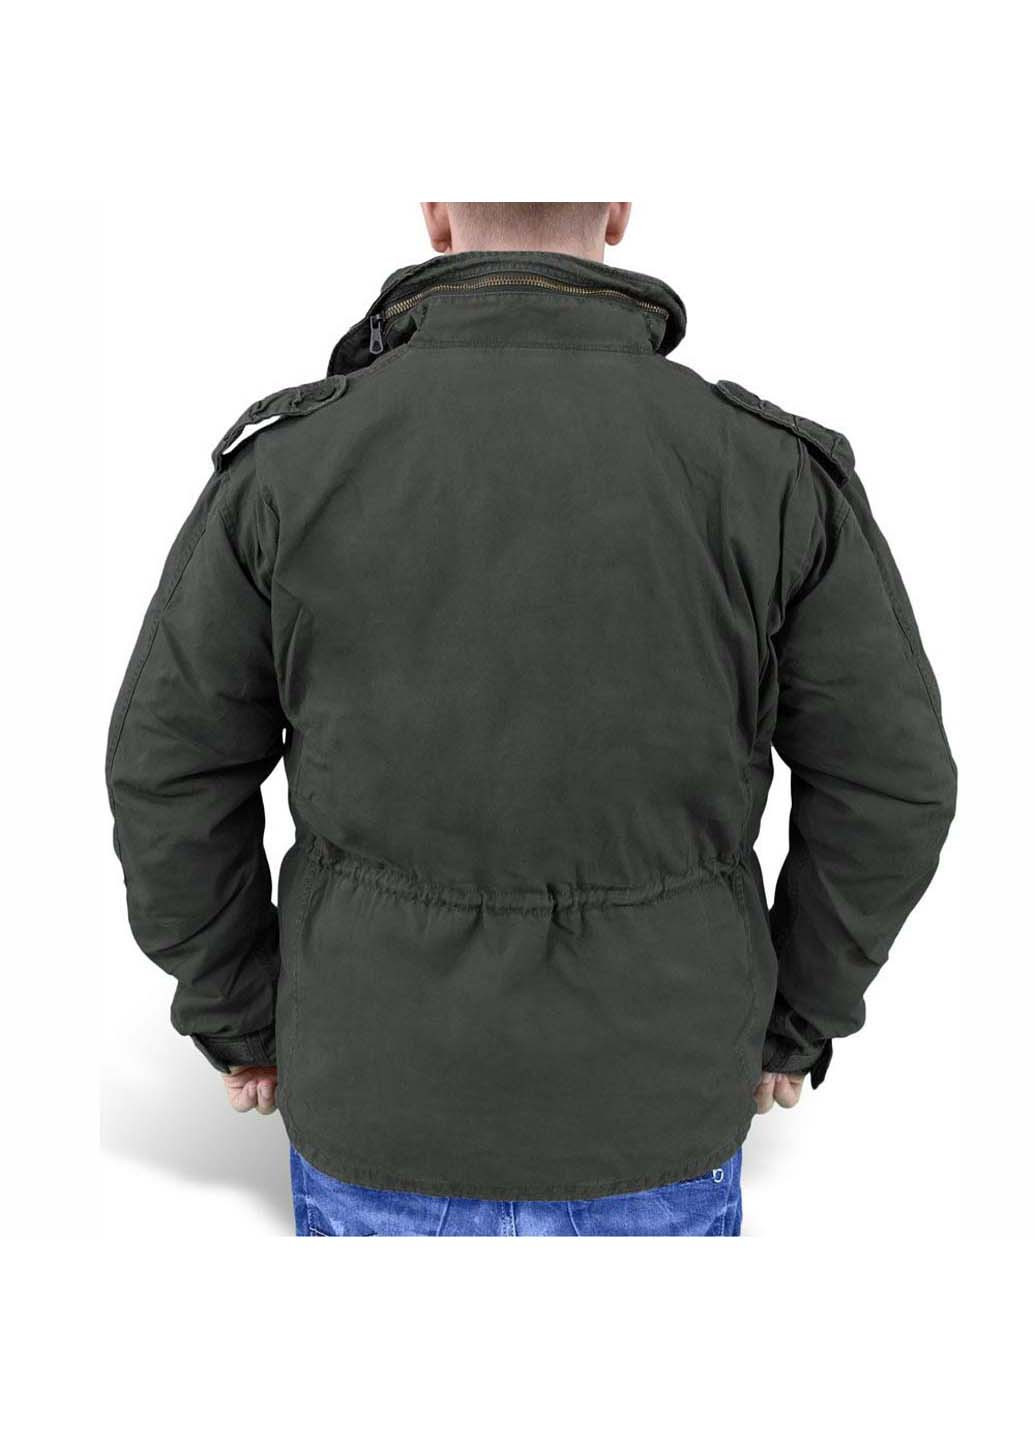 Черная зимняя куртка regiment m 65 jacket schwarz ge Surplus